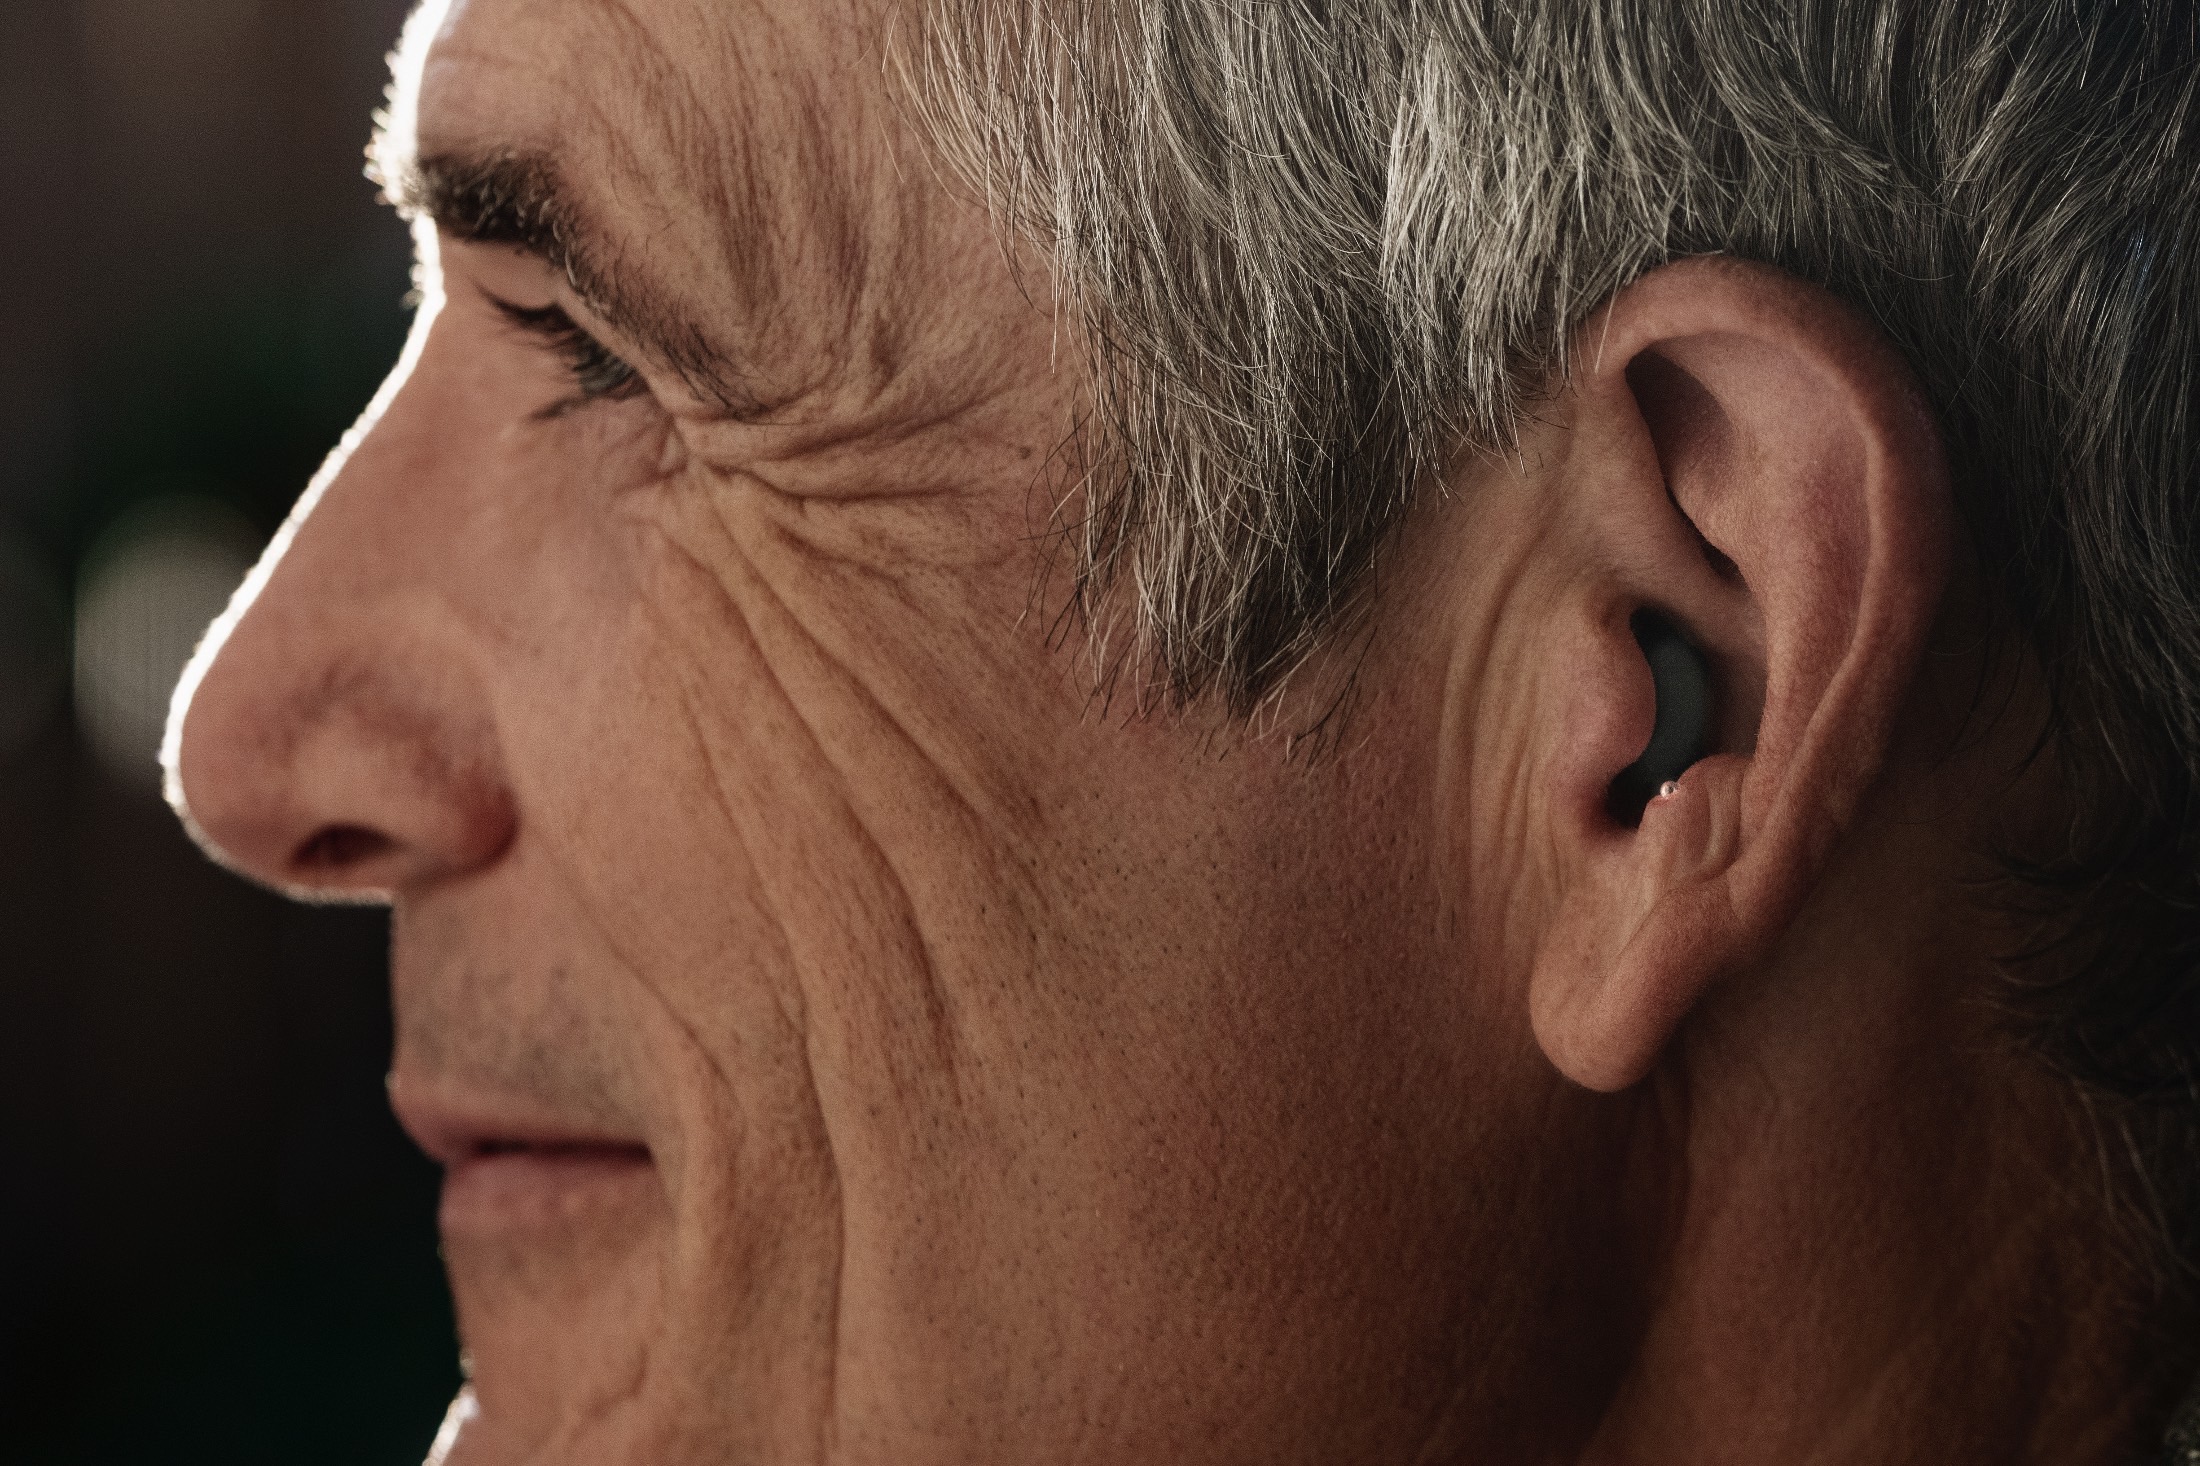 Man wearing Sony CRE-C10 OTC hearing aids.